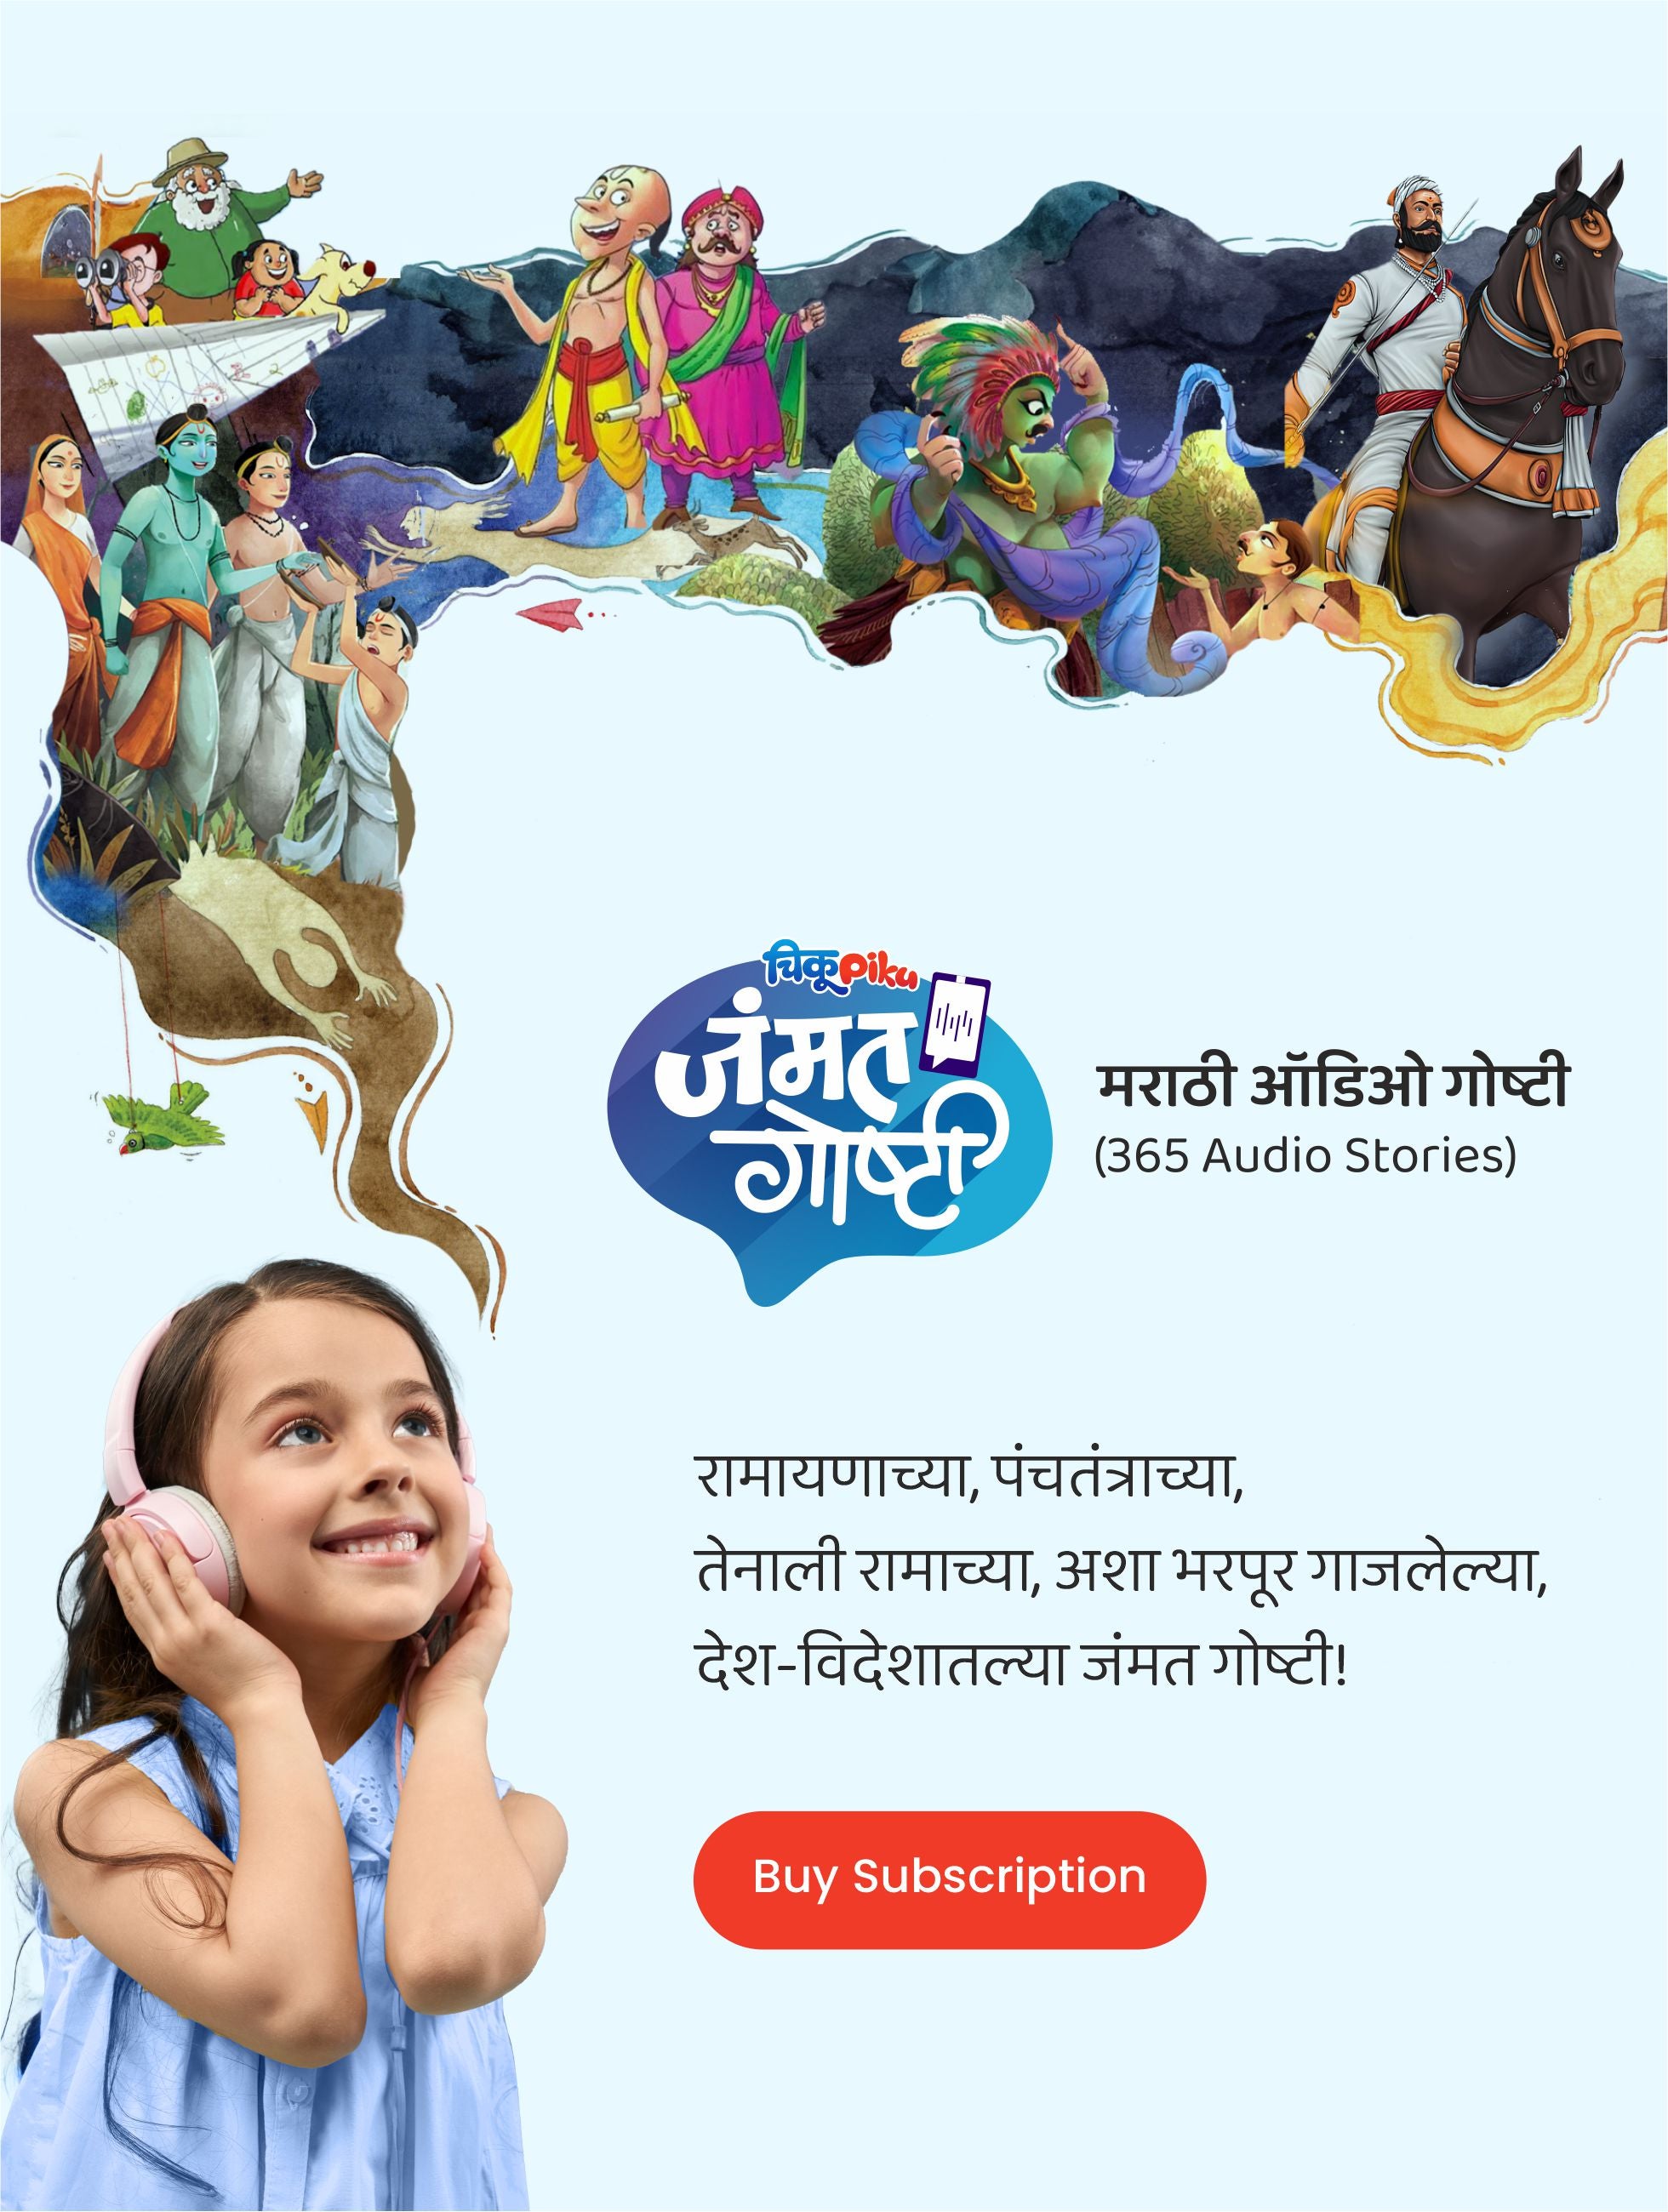 ChikuPiku Marathi Audio Stories Subscription